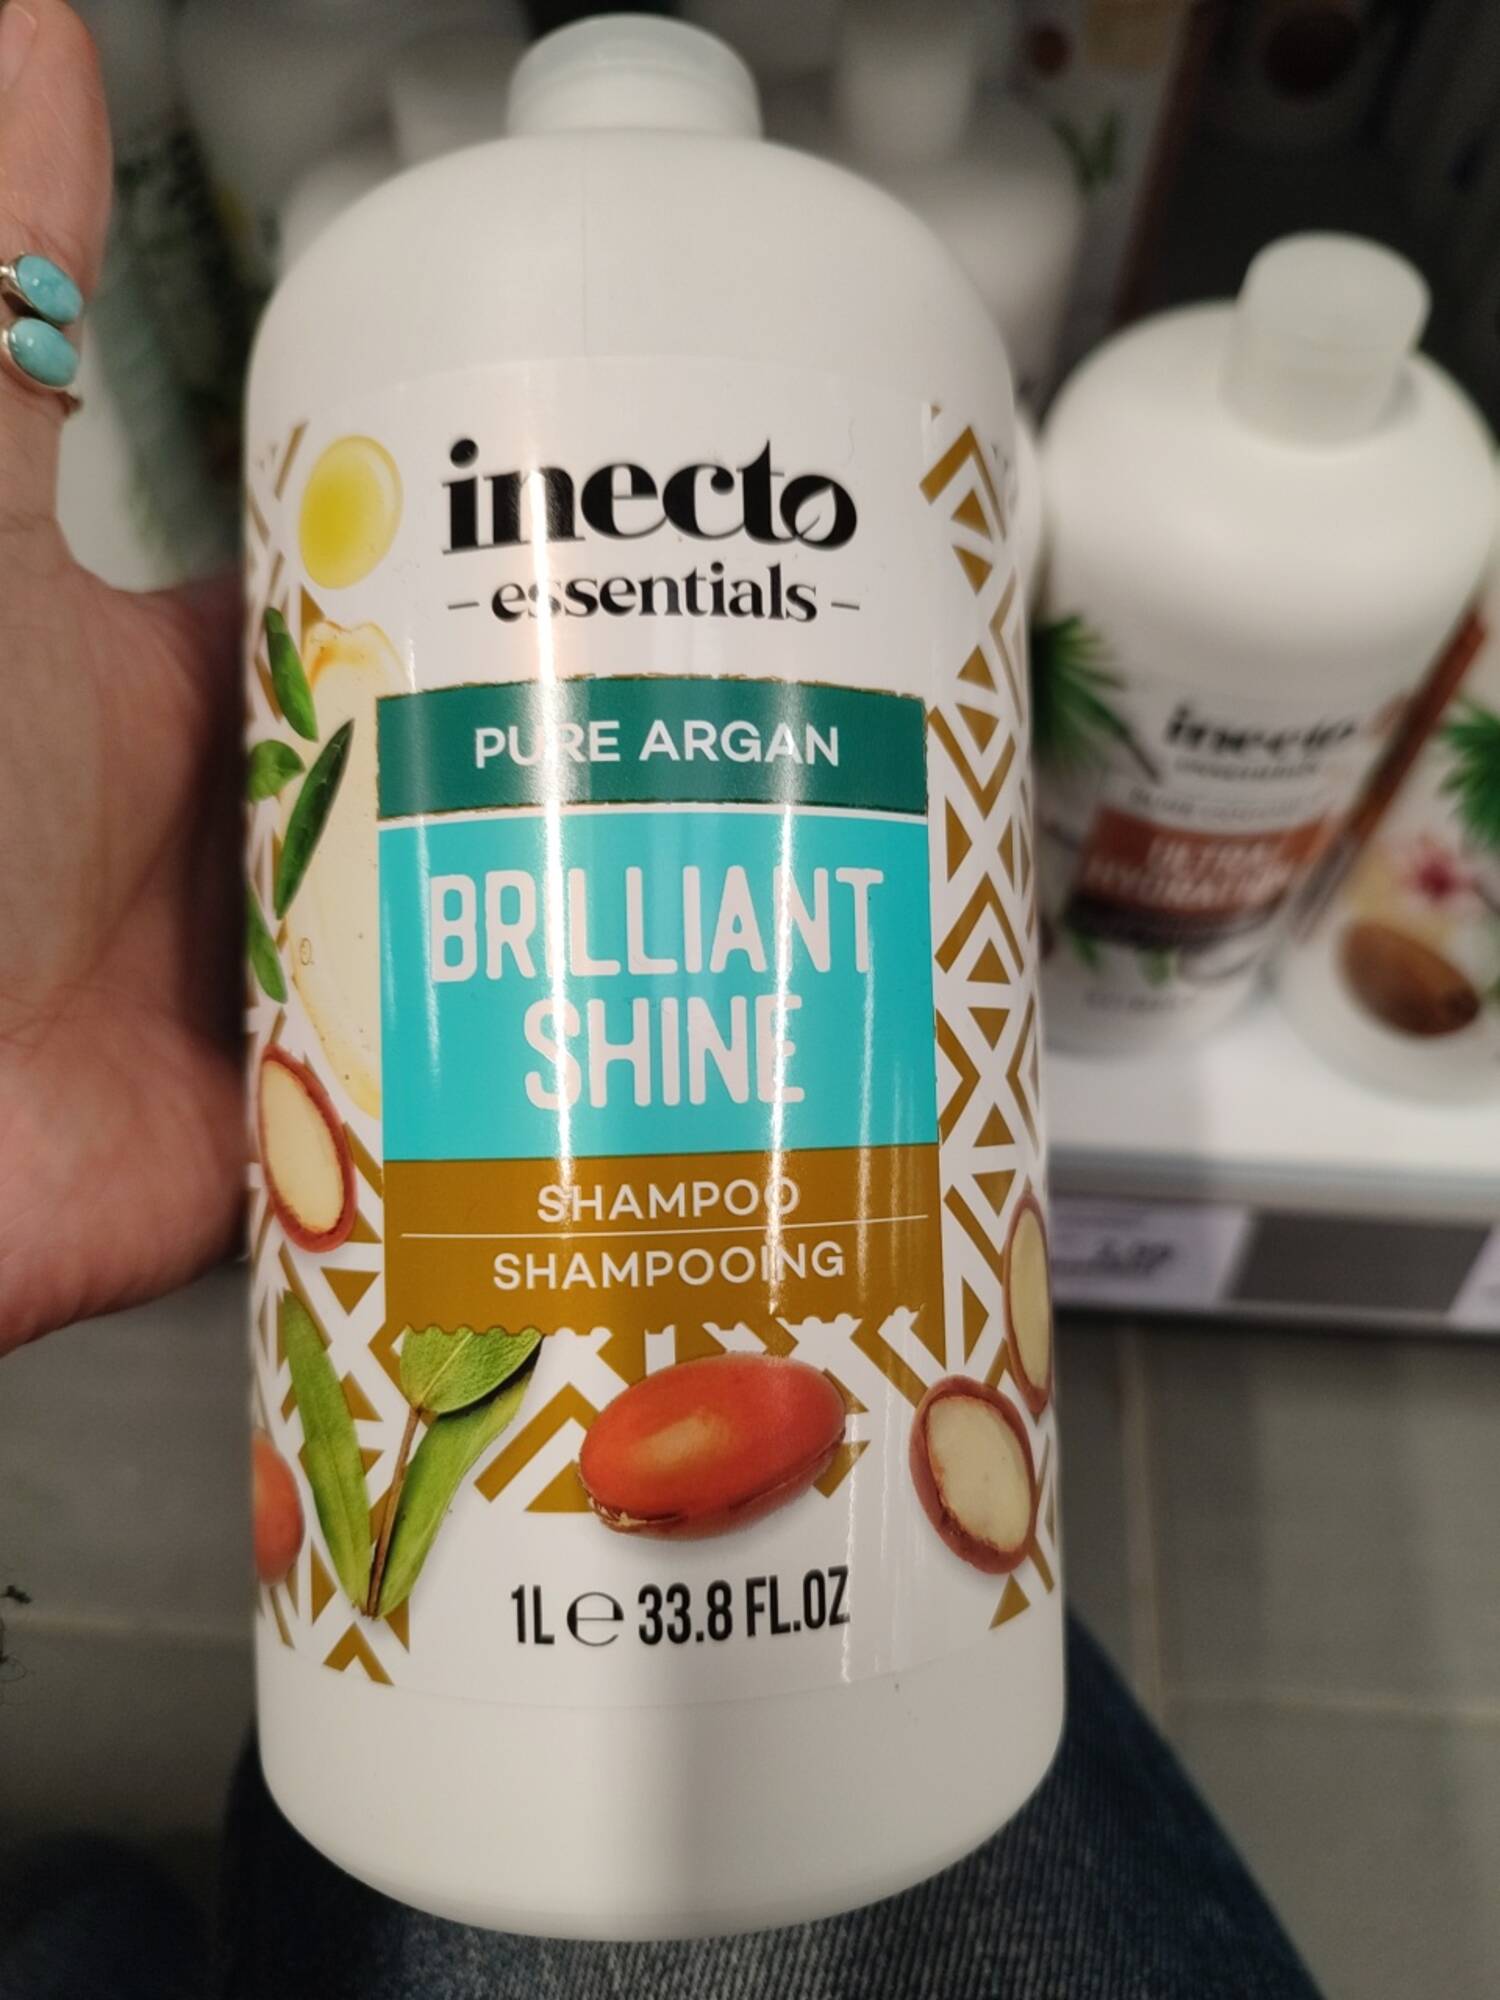 INECTO - Brilliant shine - Shampooing pure argan